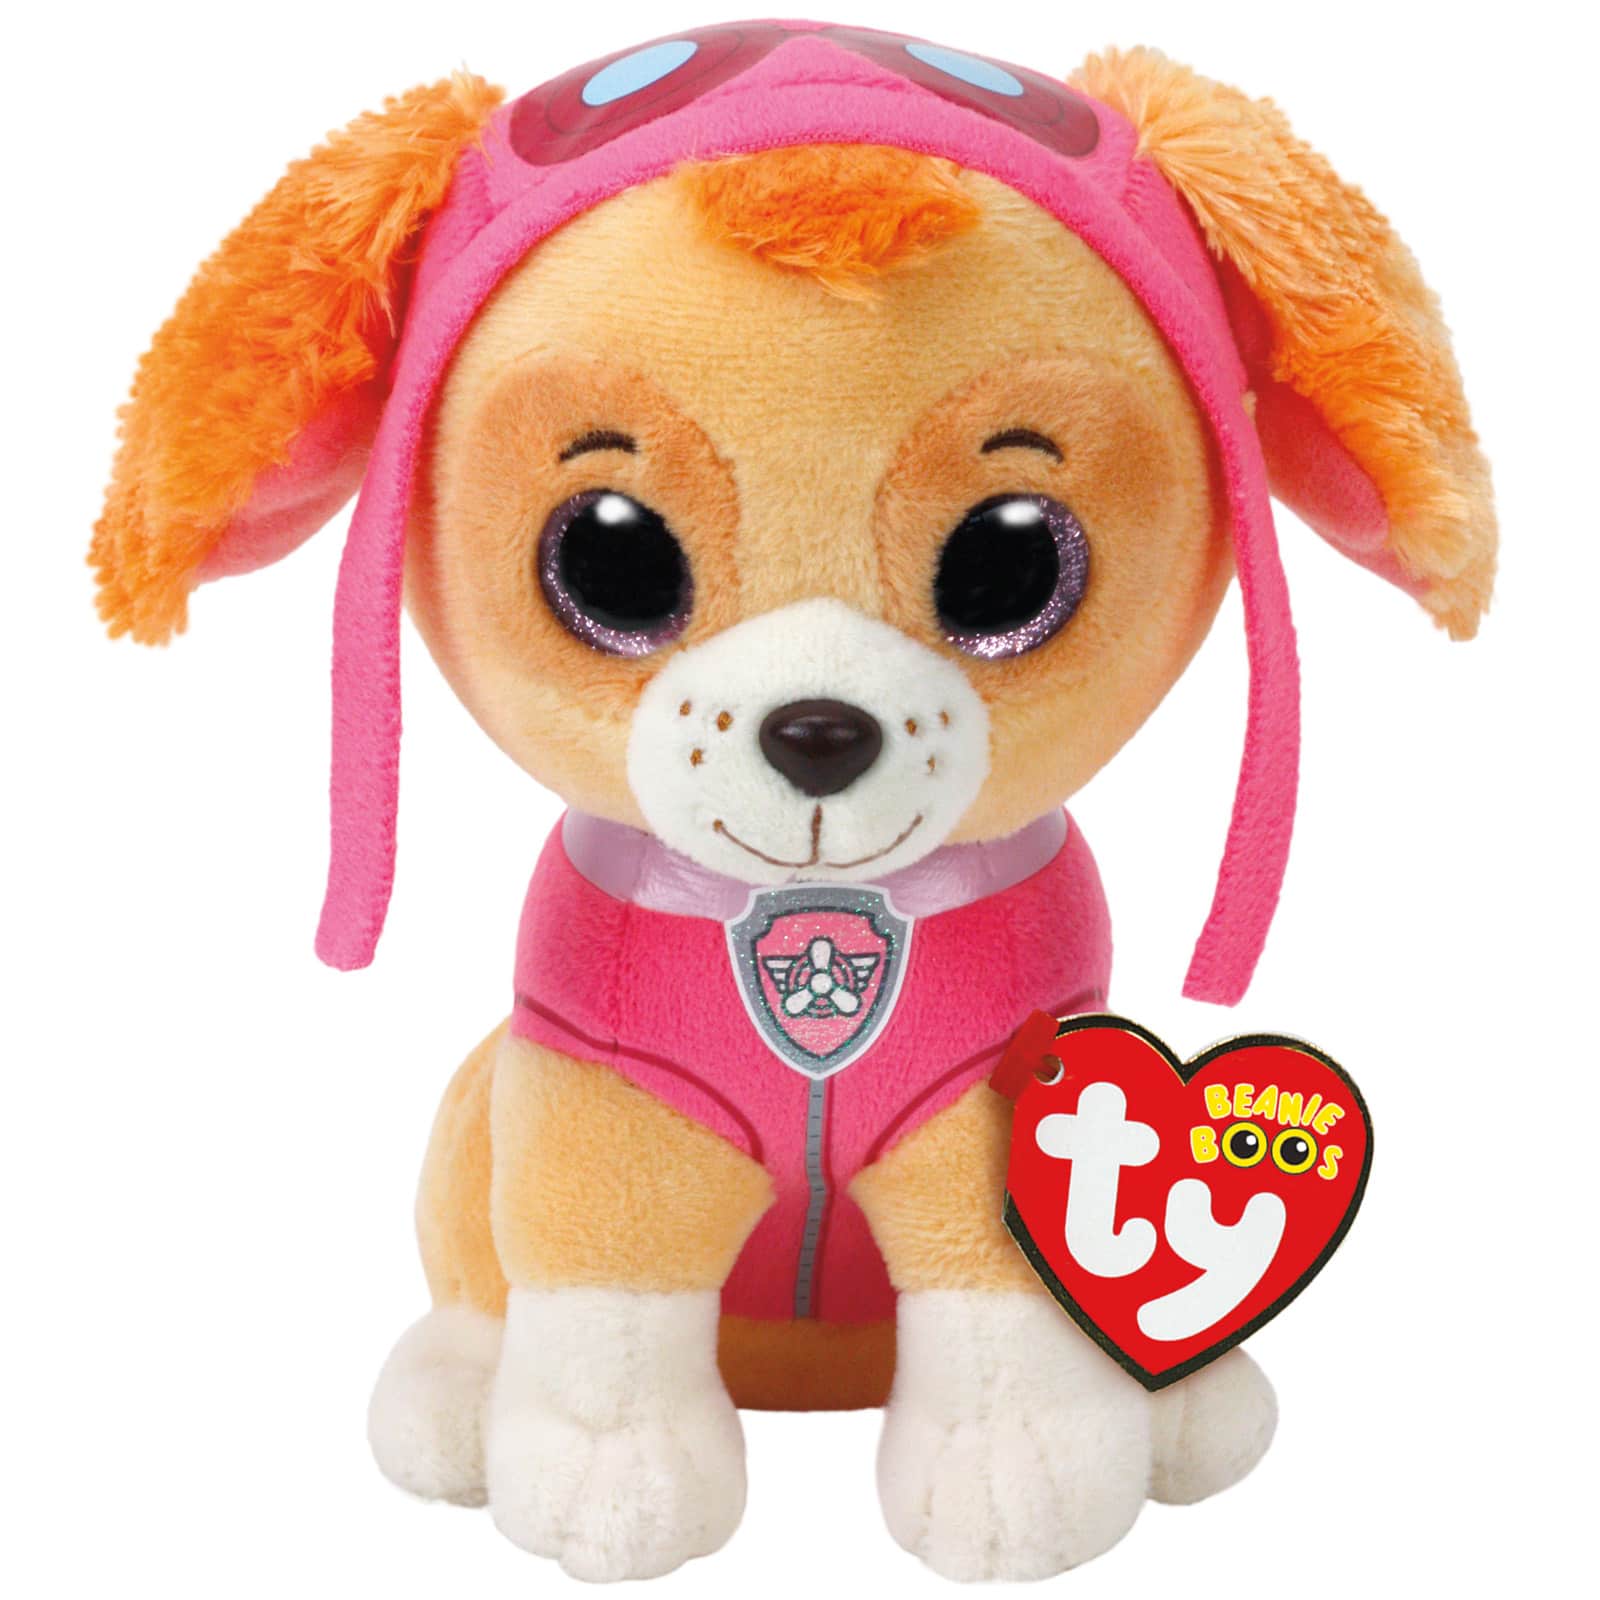 TY Beanie Boos 6" Paw Patrol SKYE the Cockapoo Plush Stuffed Animal Toy MWMT's 